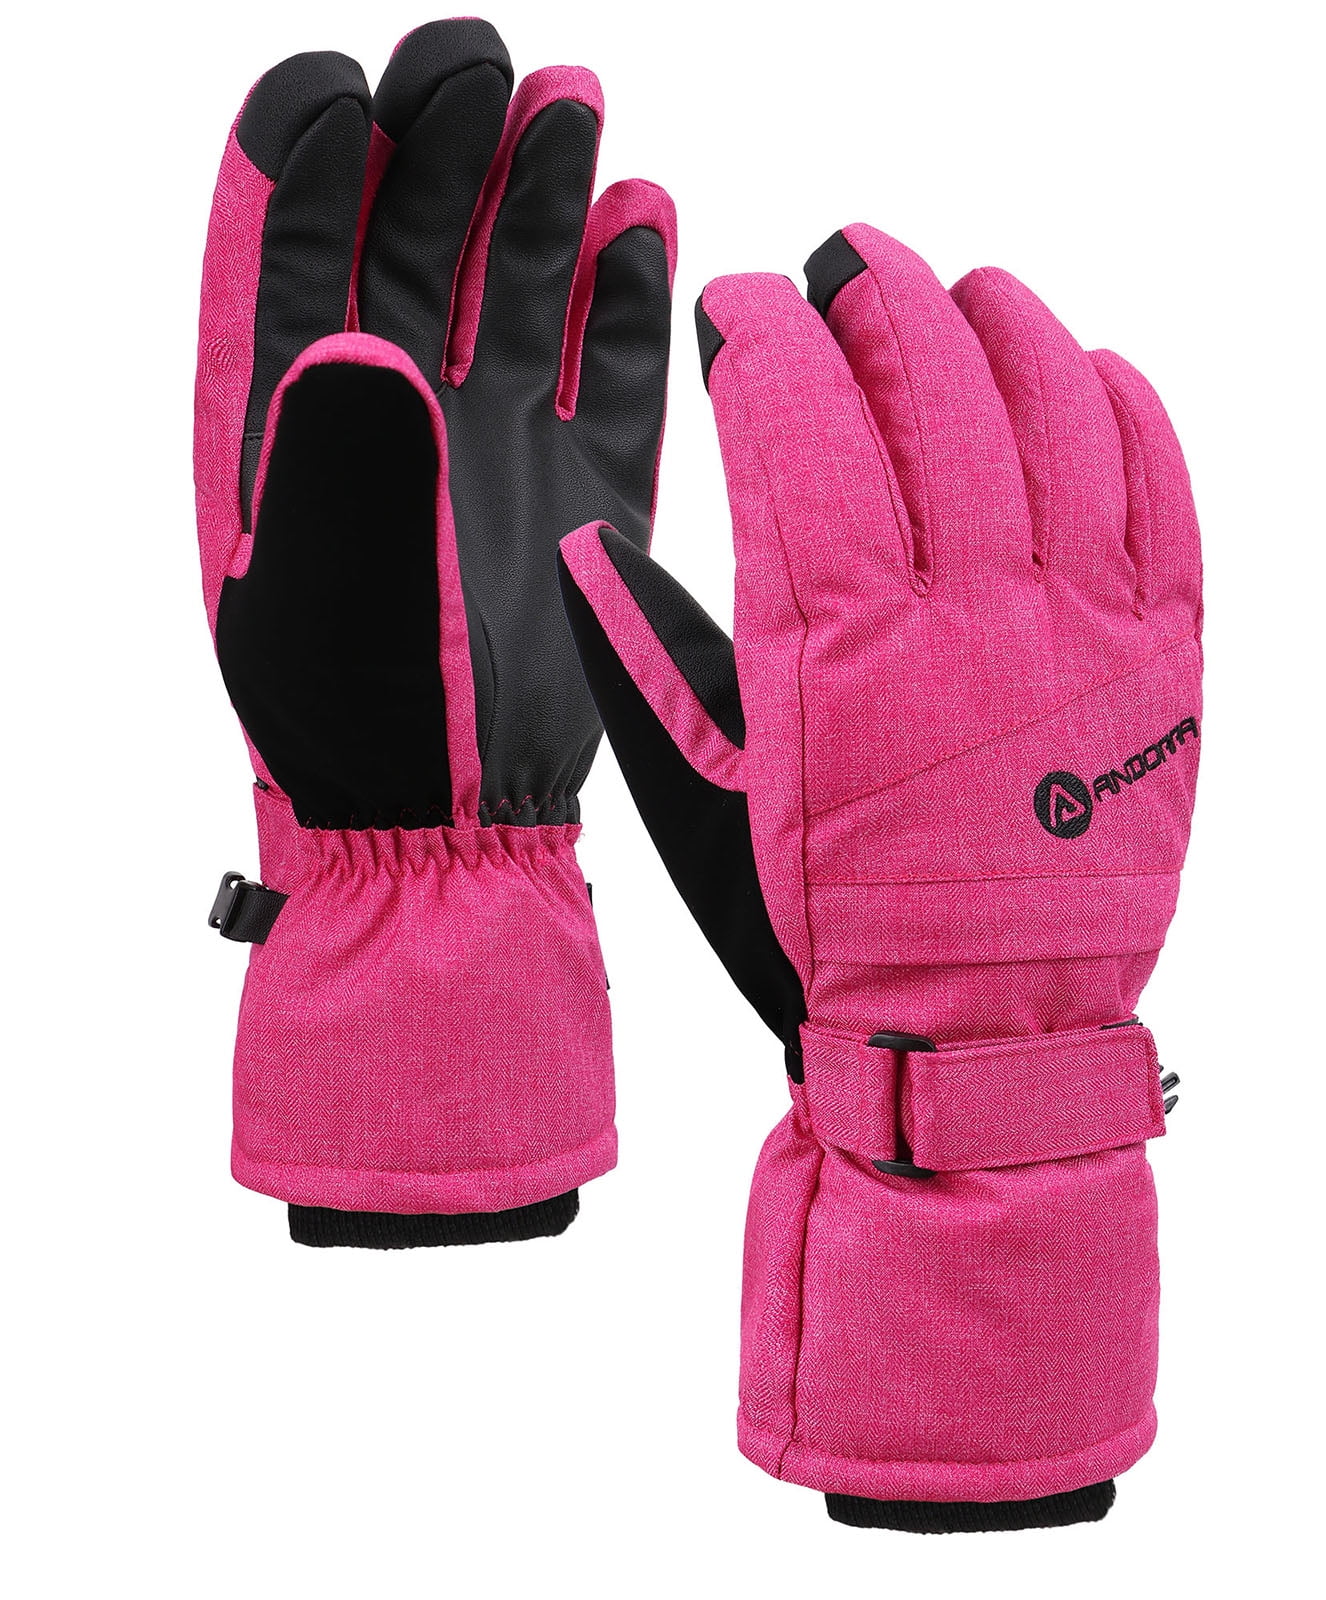 Touchscreen Snow Gloves Waterproof Insulated Winter Gloves For Men/Women,Pink,L